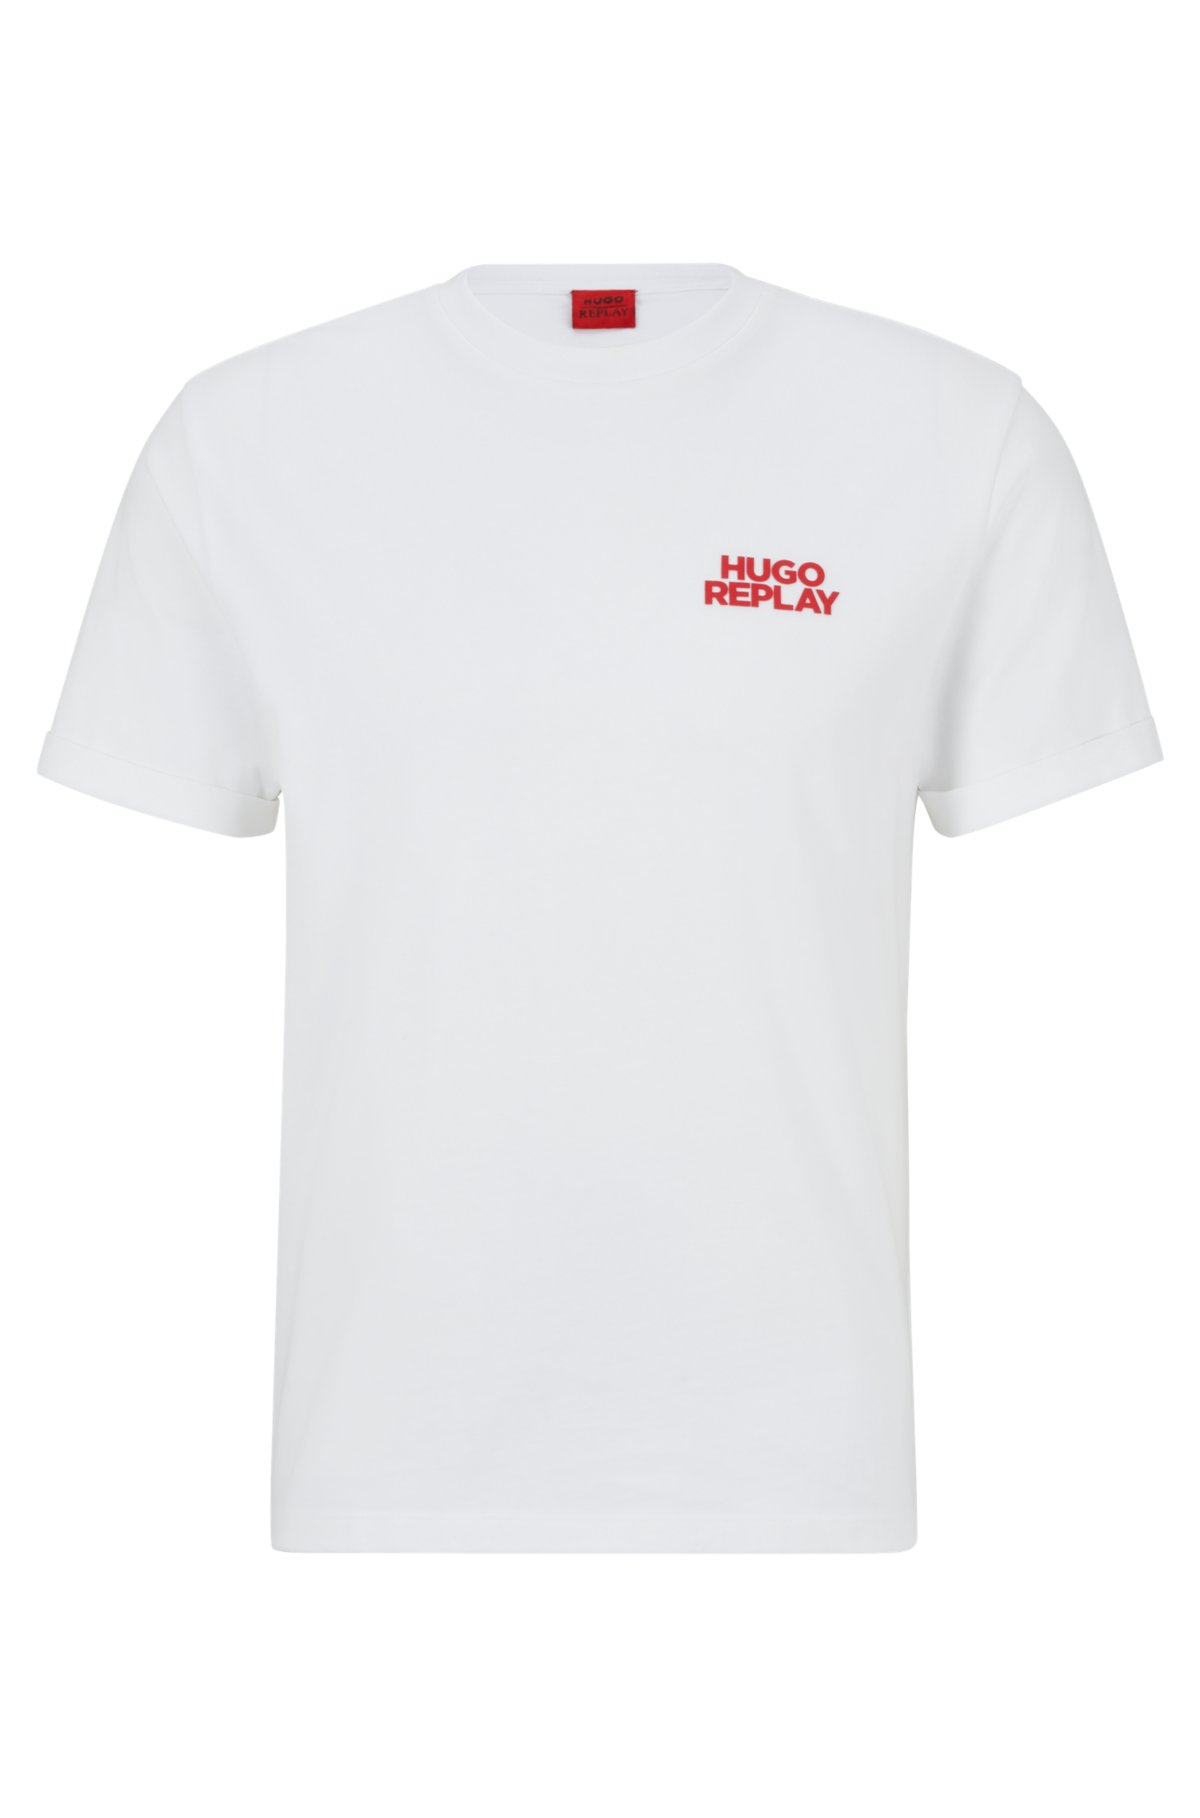 HUGO - HUGO capsule REPLAY T-shirt cotton with logo print 